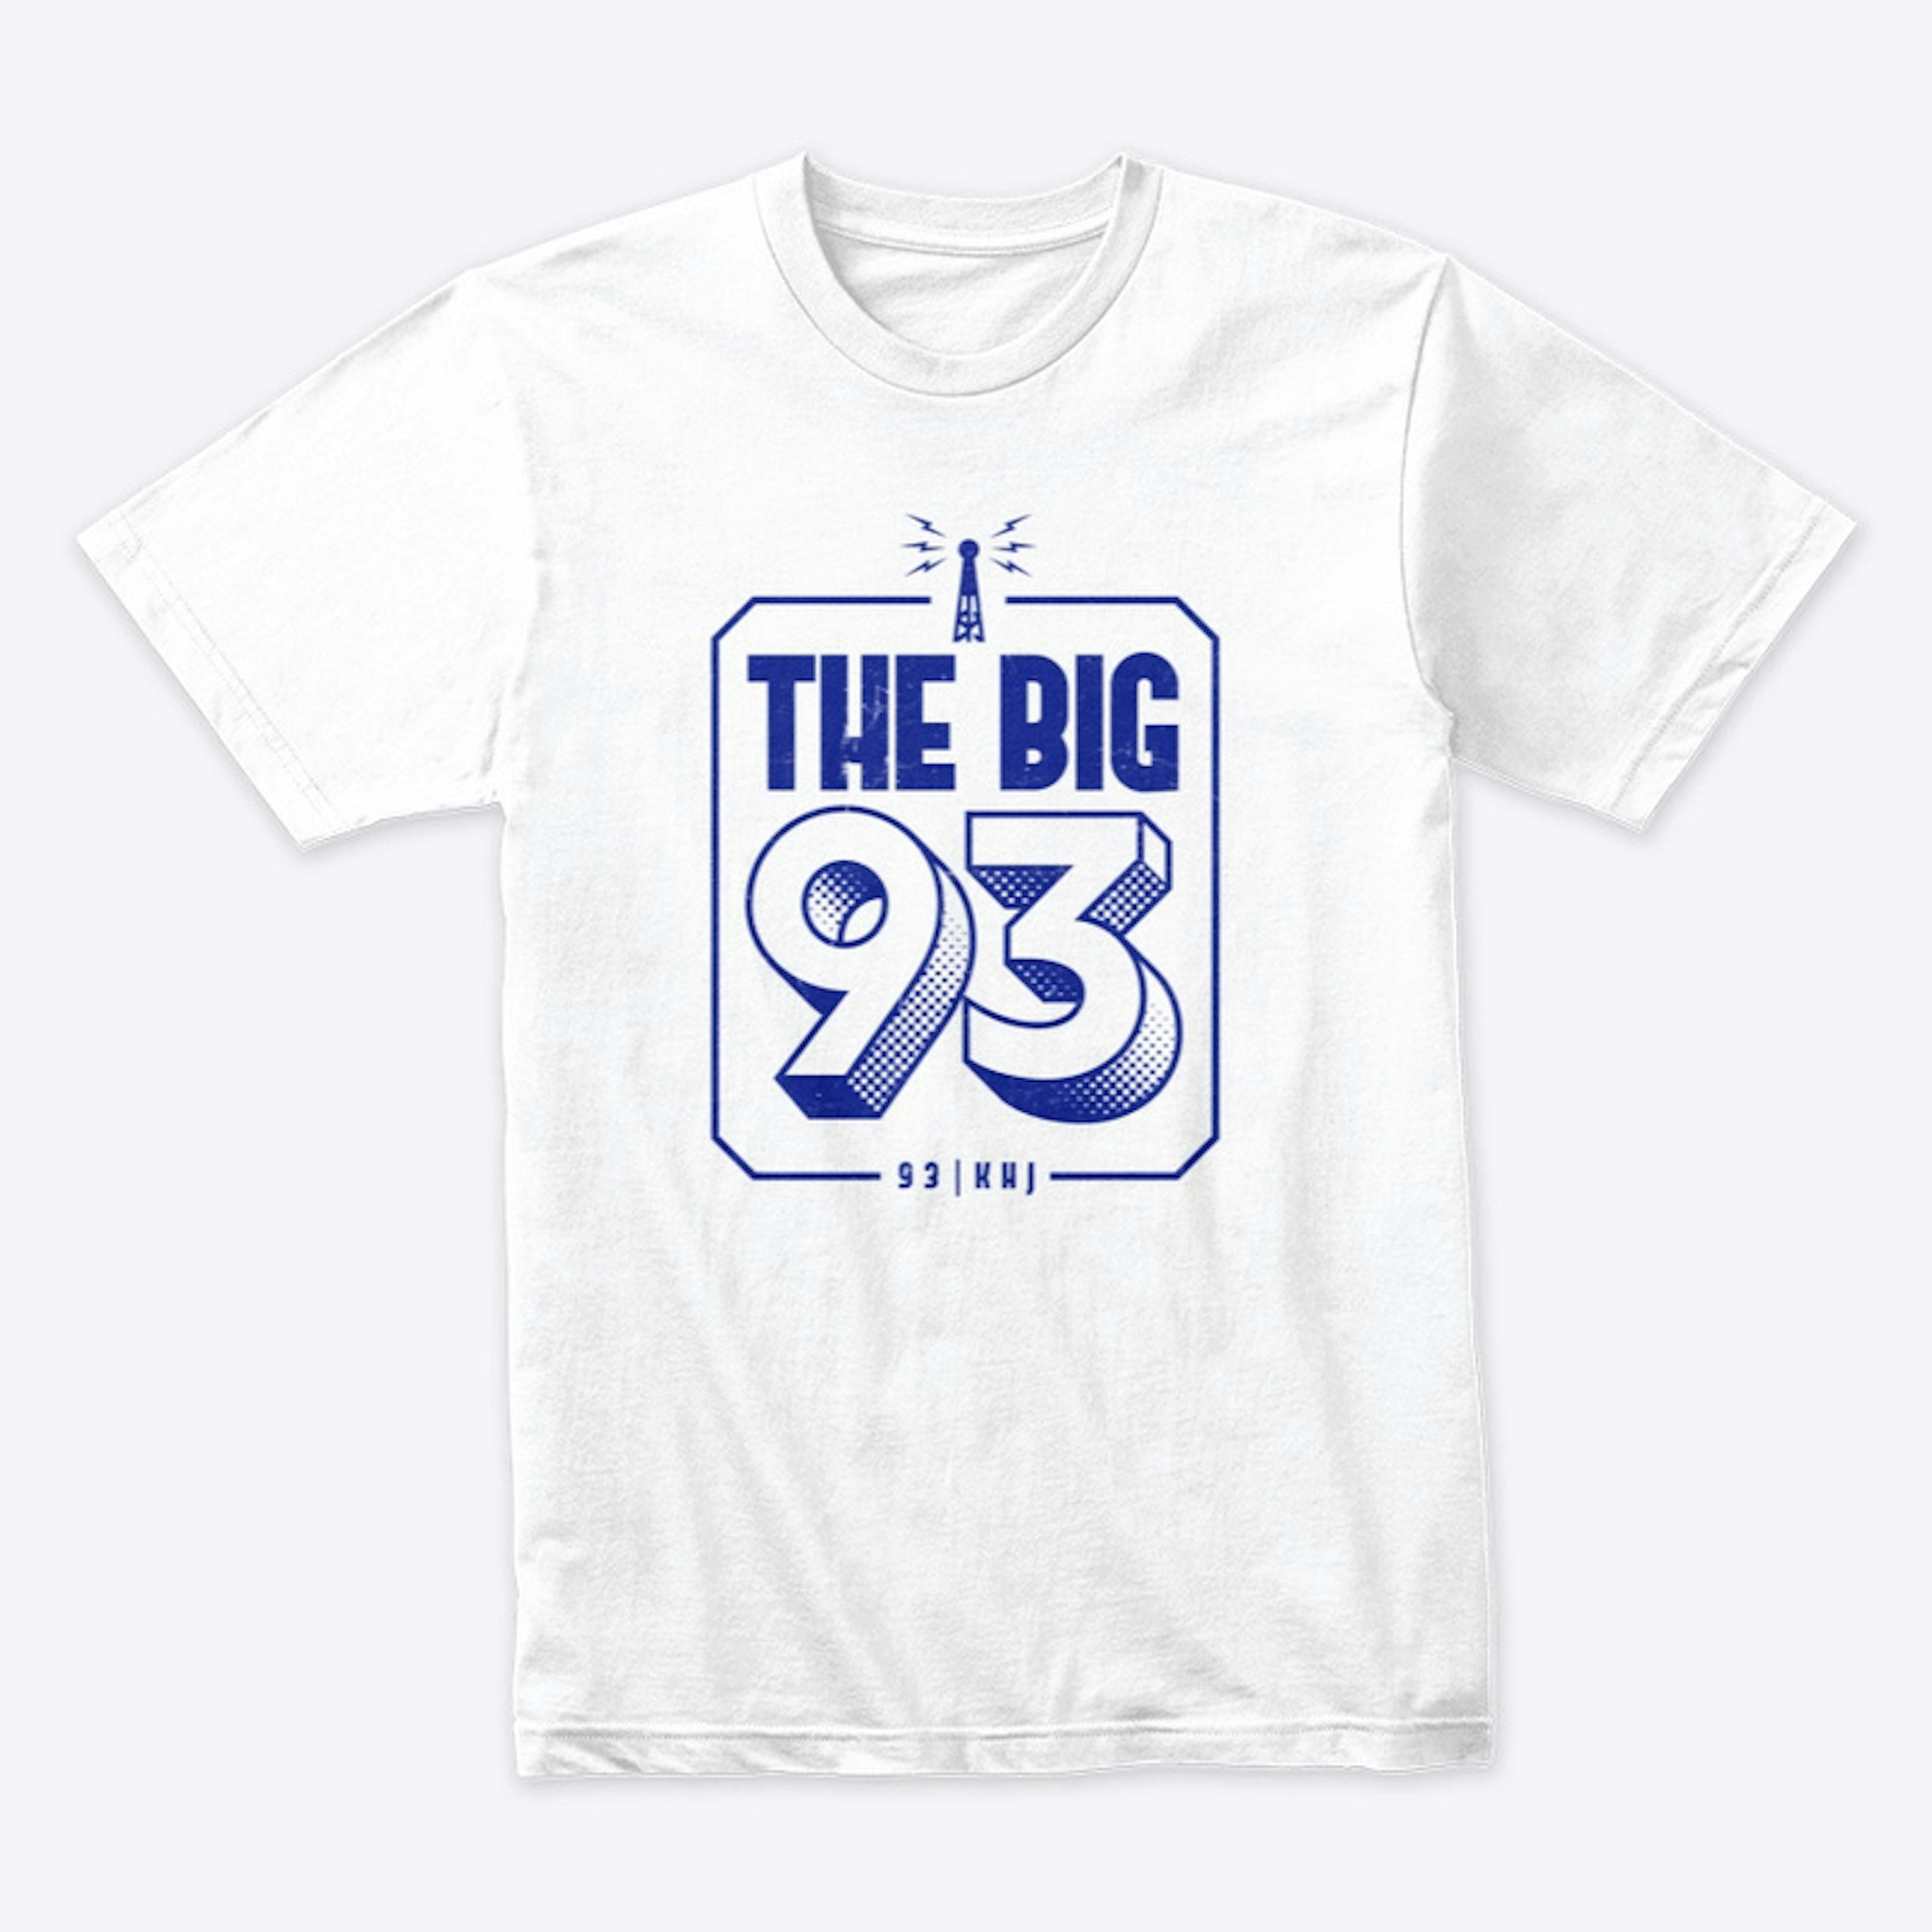 The Big 93